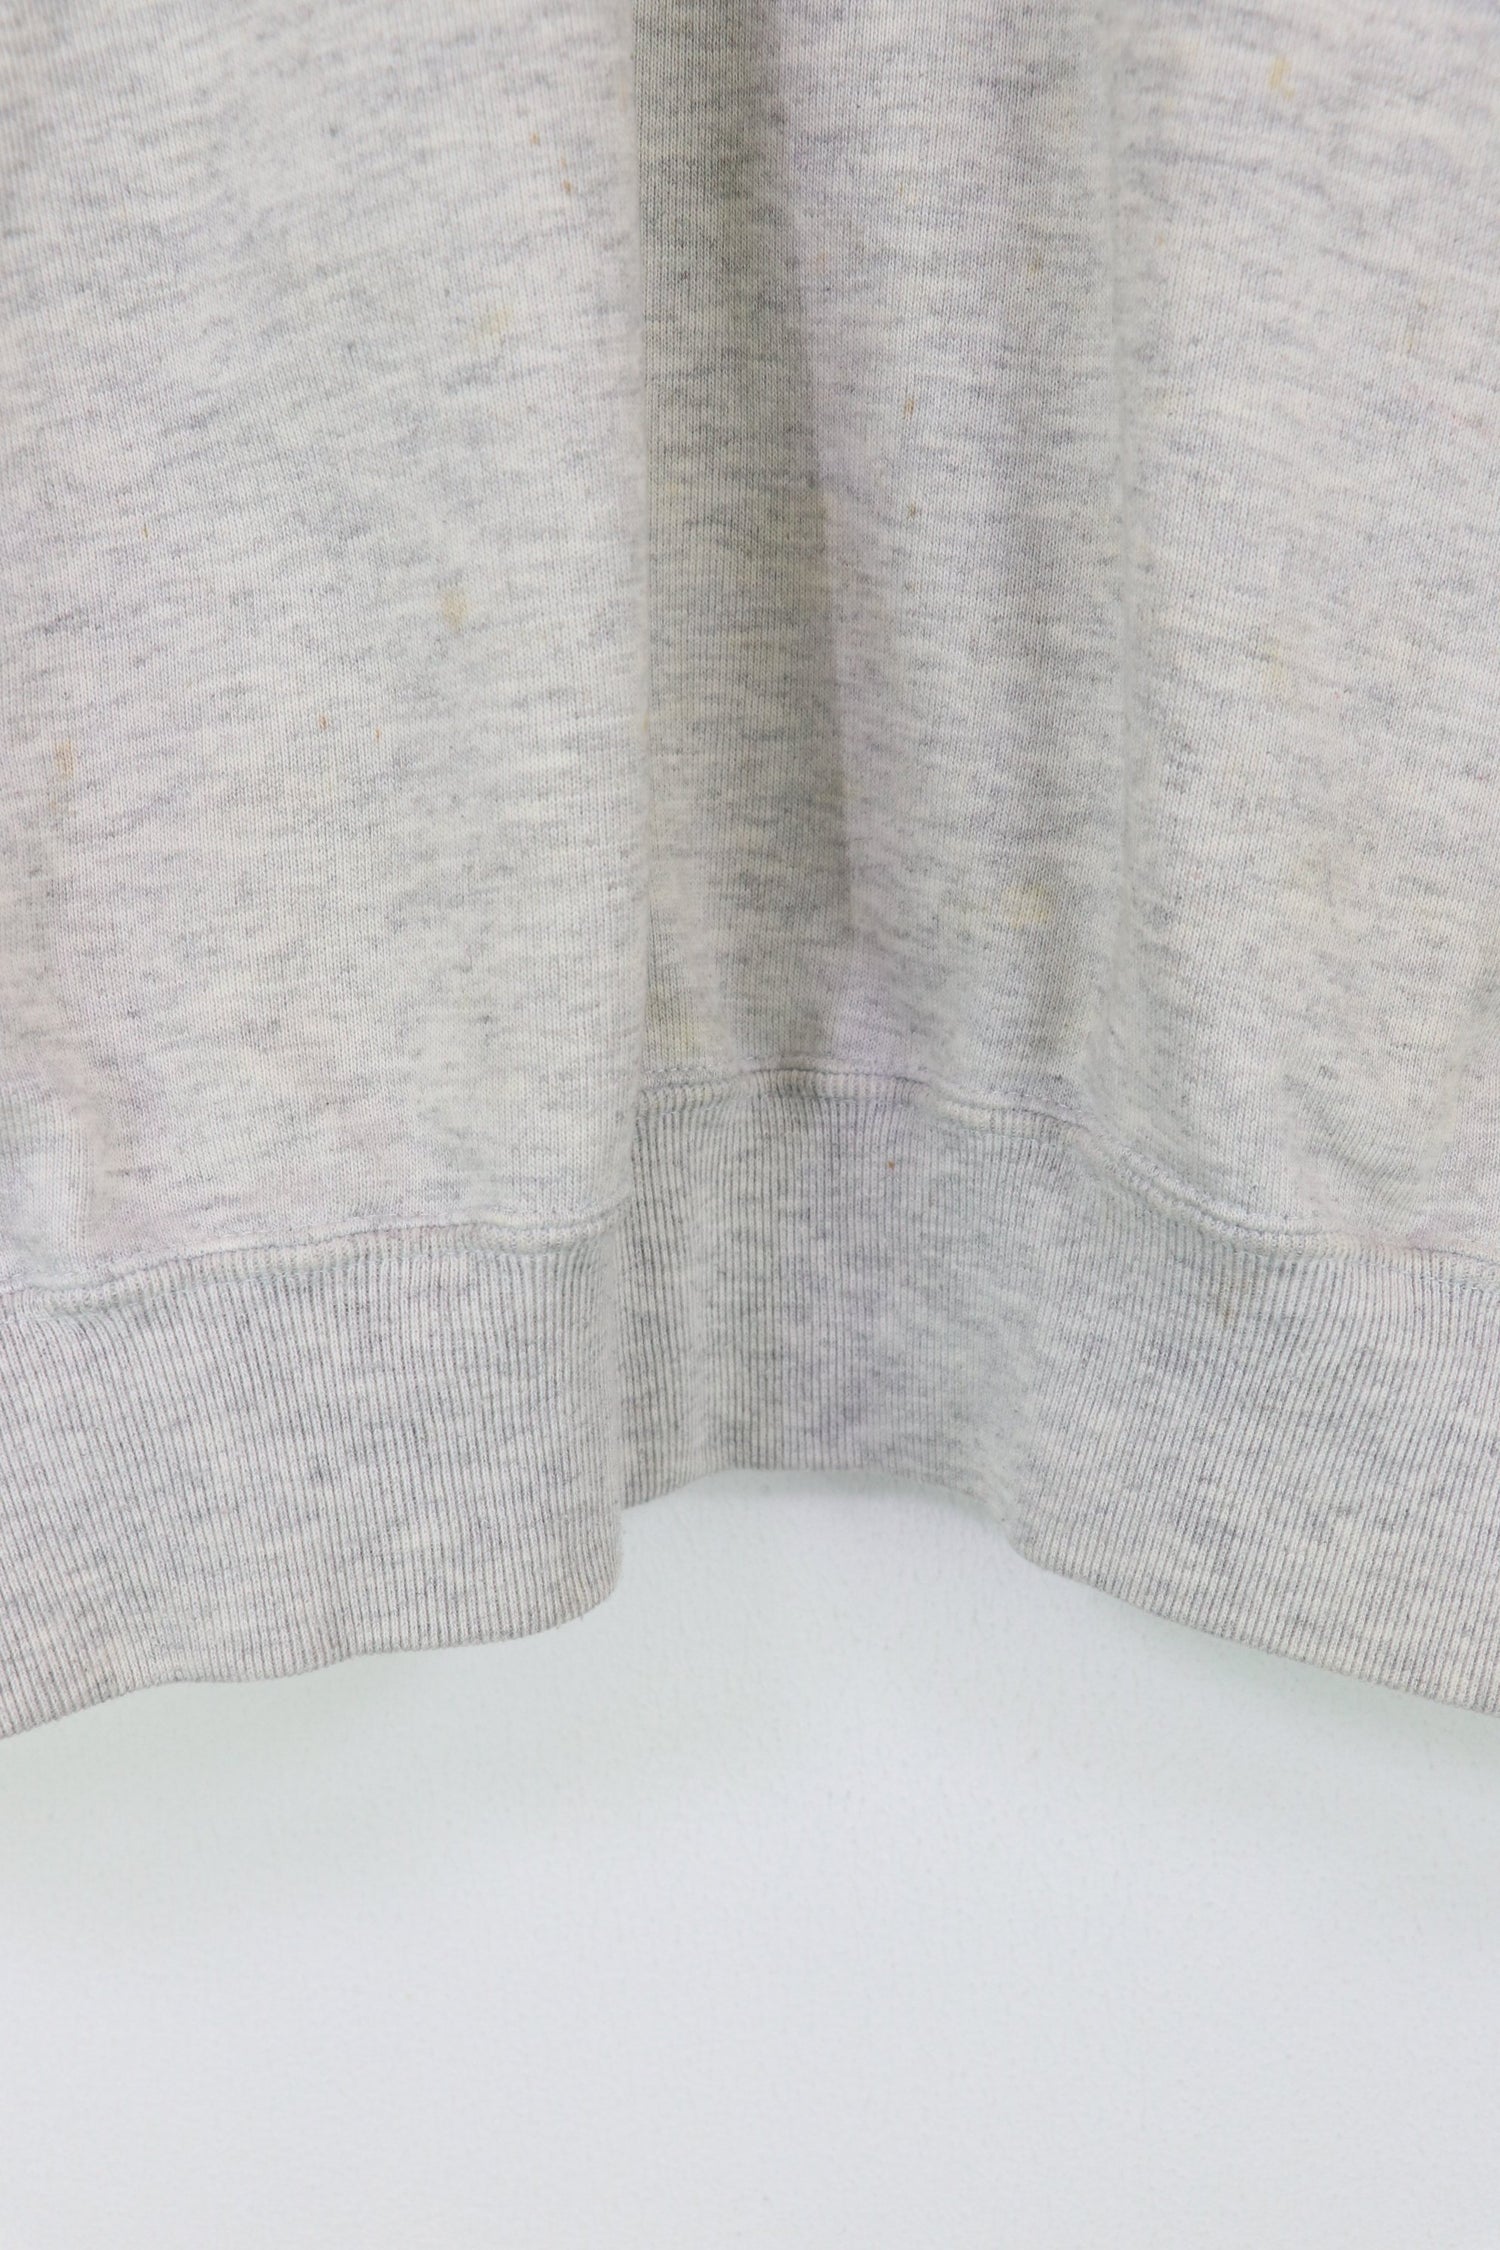 Champion 1/4 Zip Sweatshirt Grey/Navy XL